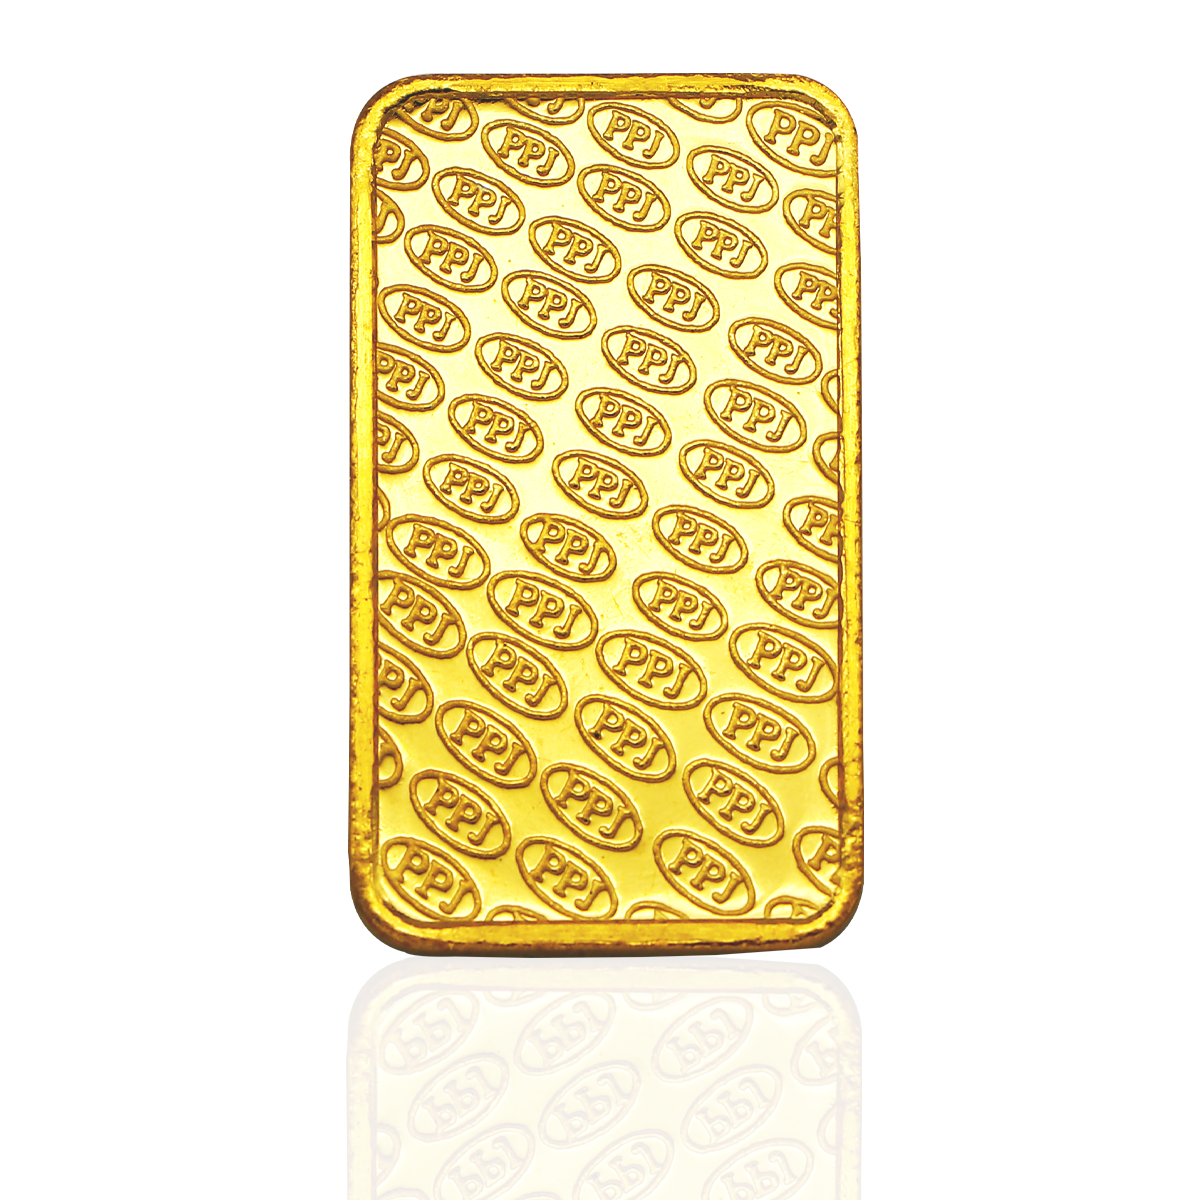 Regal 10GM Gold Coin